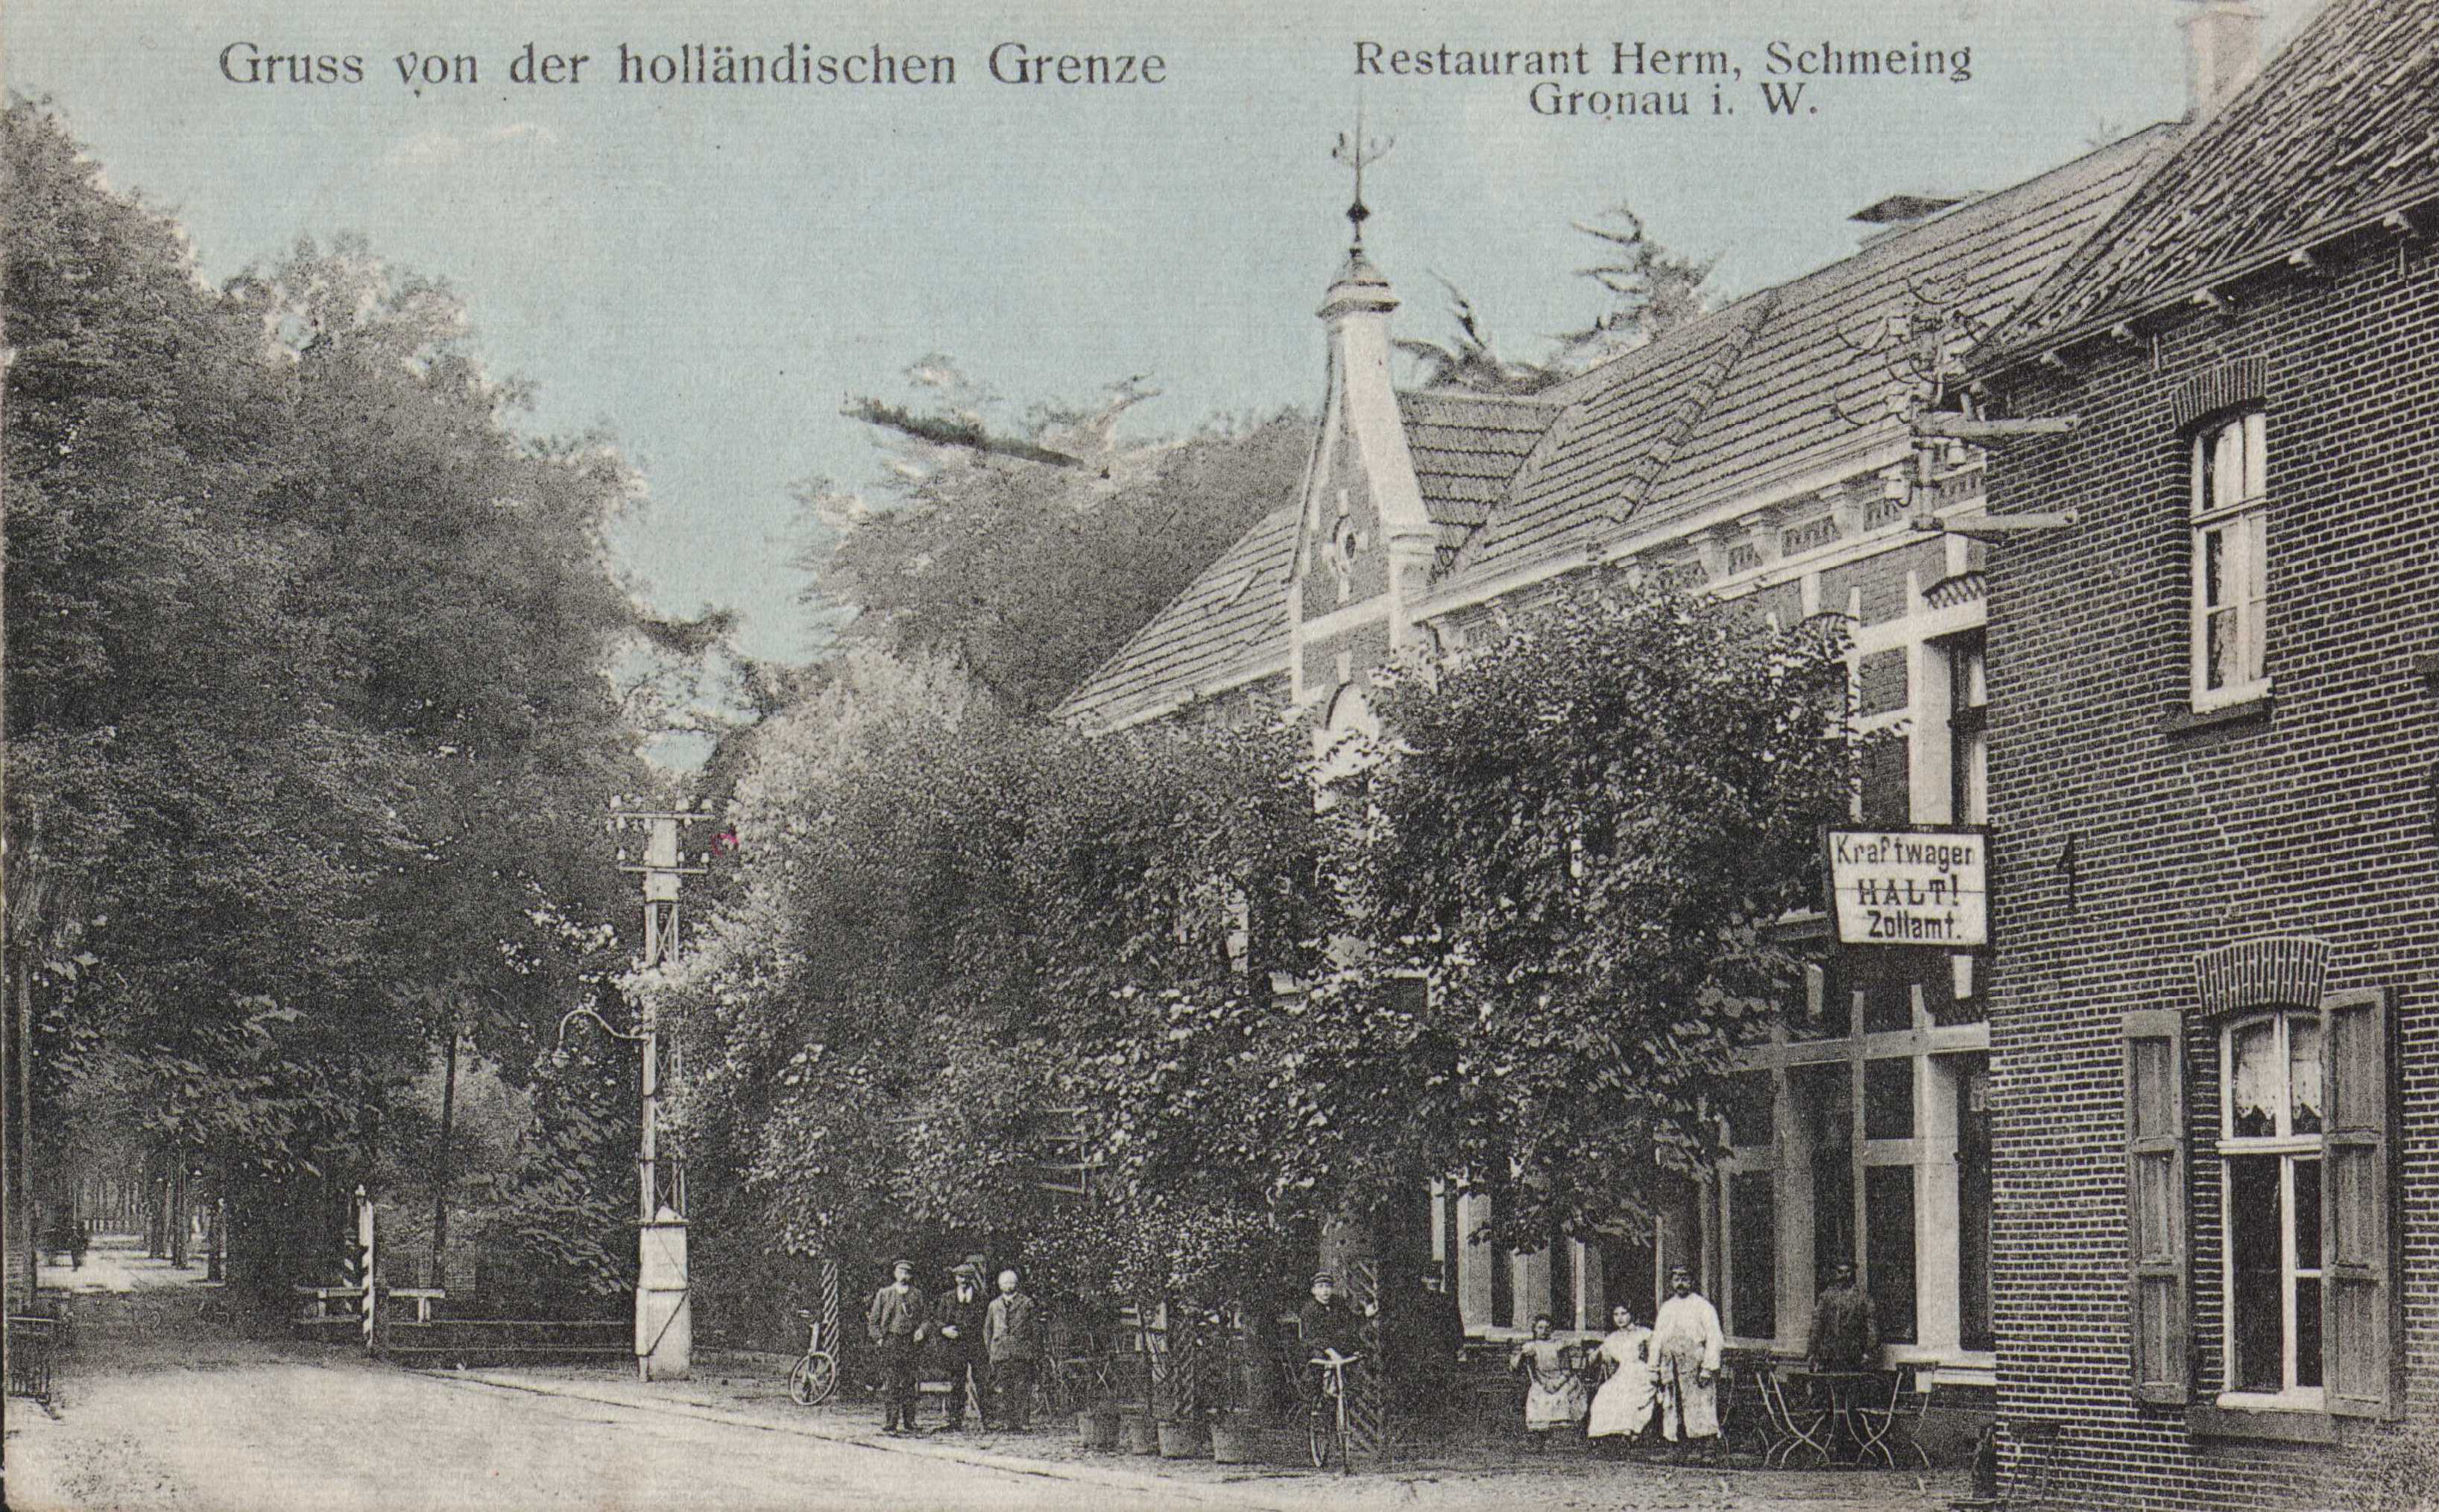 Duise-grens-schmeing-1915-8985b603.jpg